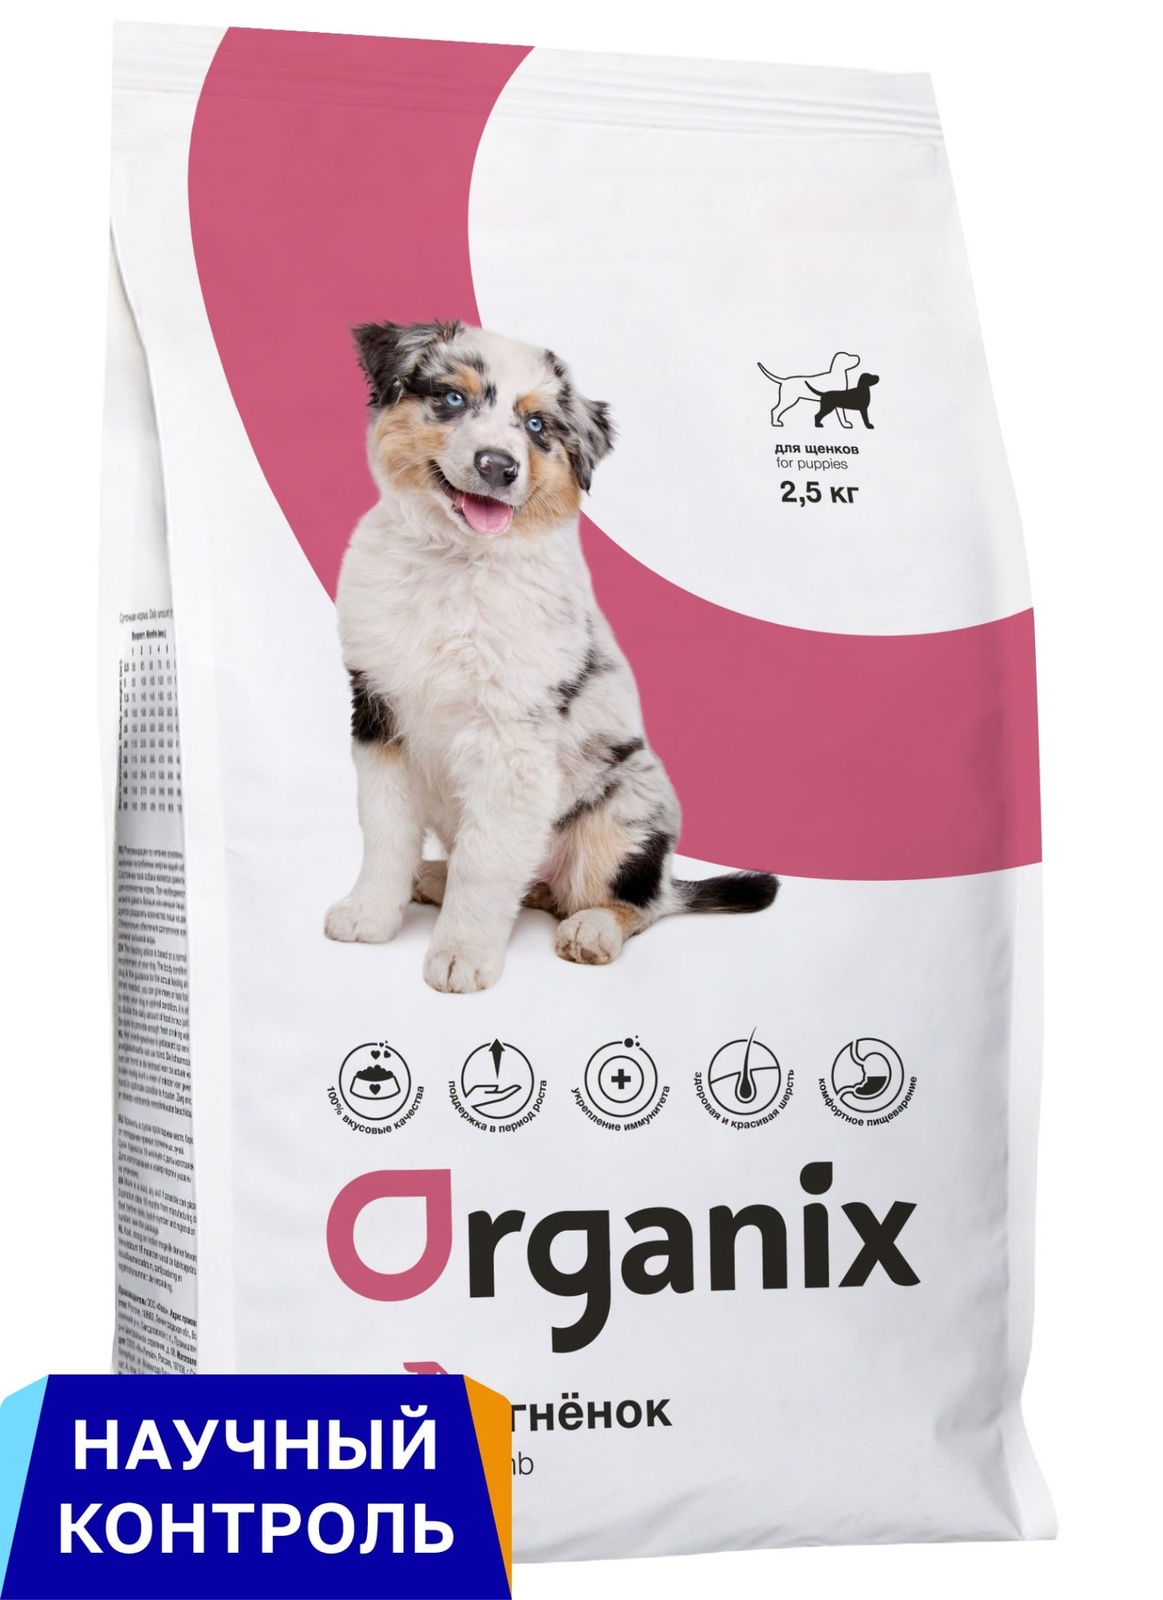 Organix Organix сухой корм для щенков, с ягненком (12 кг)